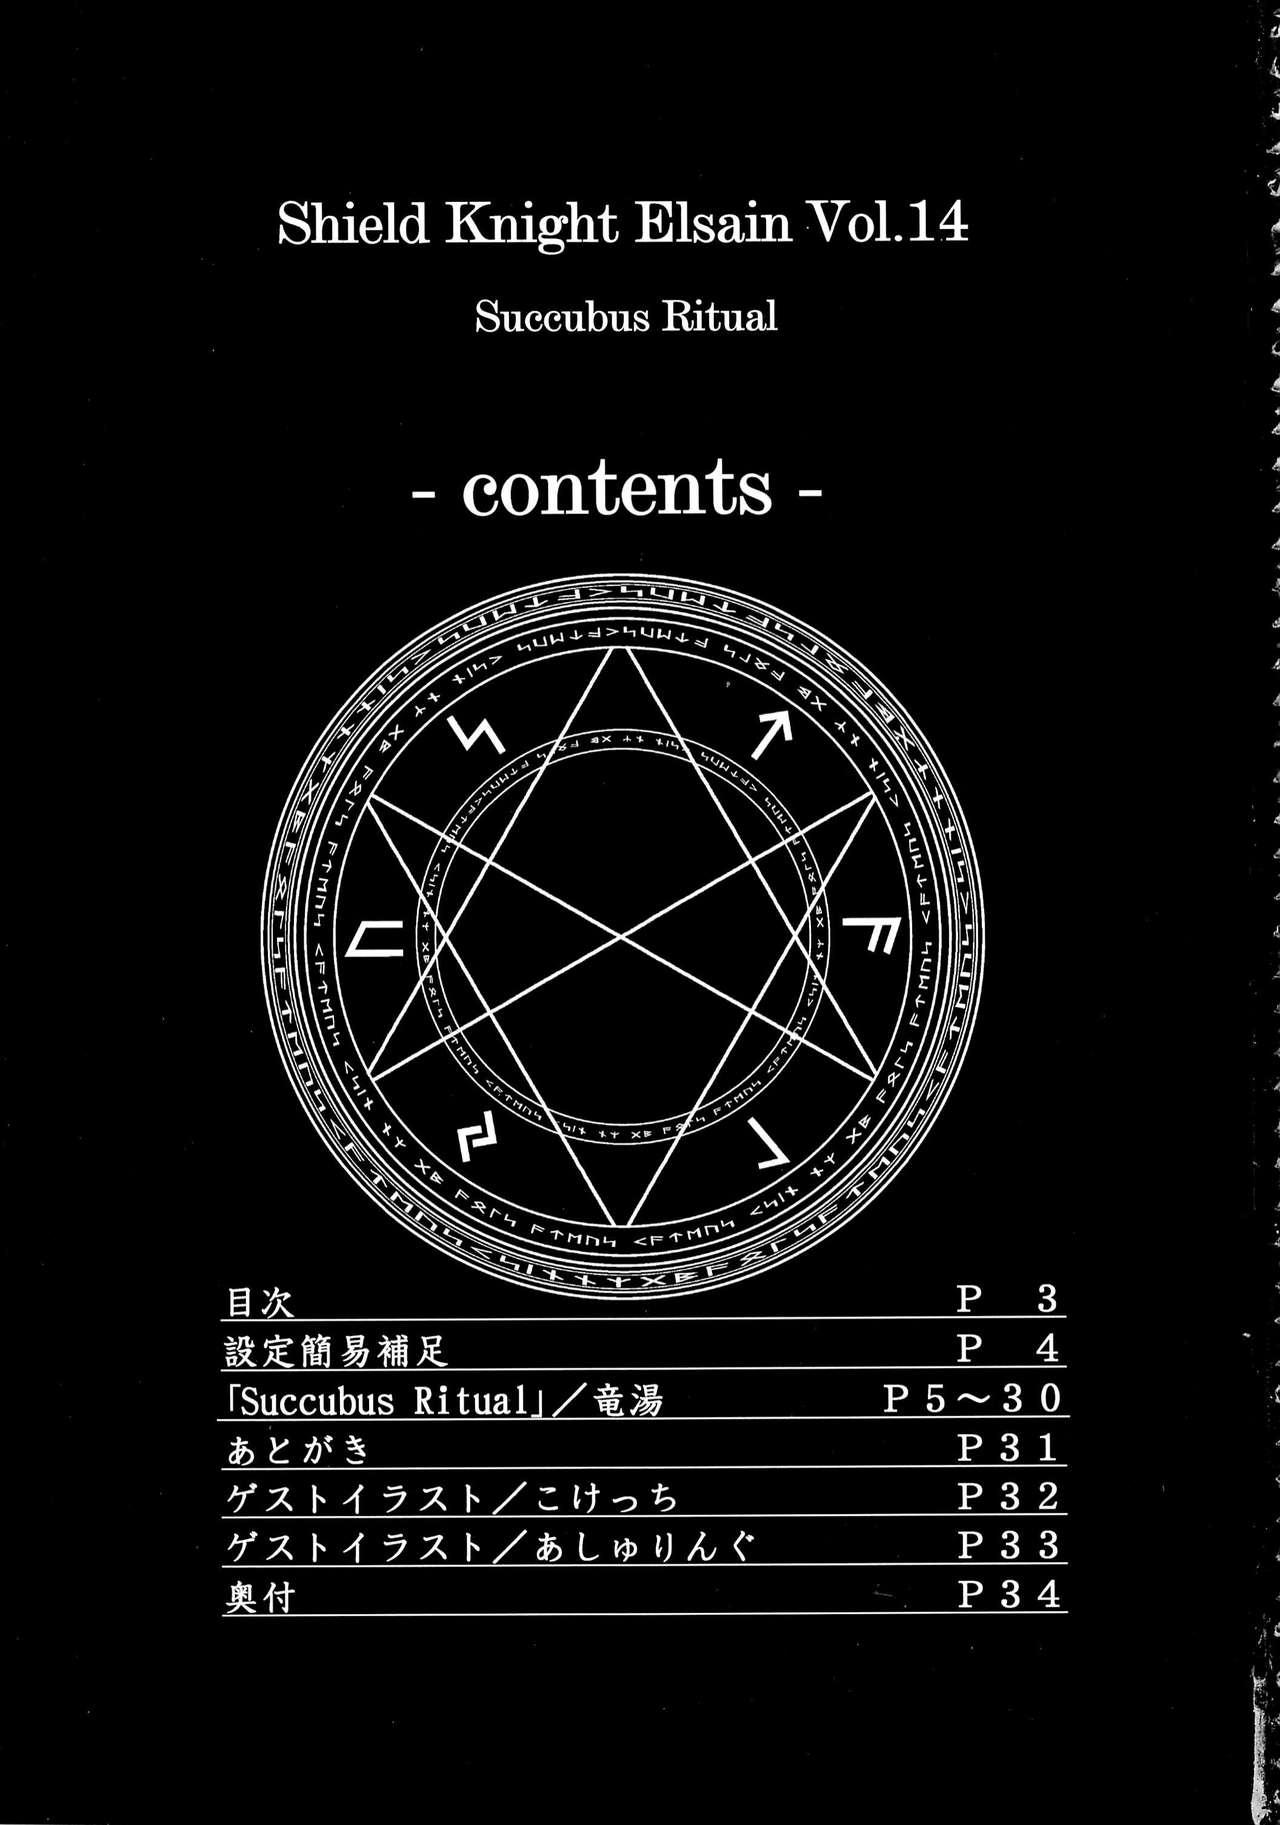 Shield Knight Elsain Vol. 14 "Succubus Ritual" 2